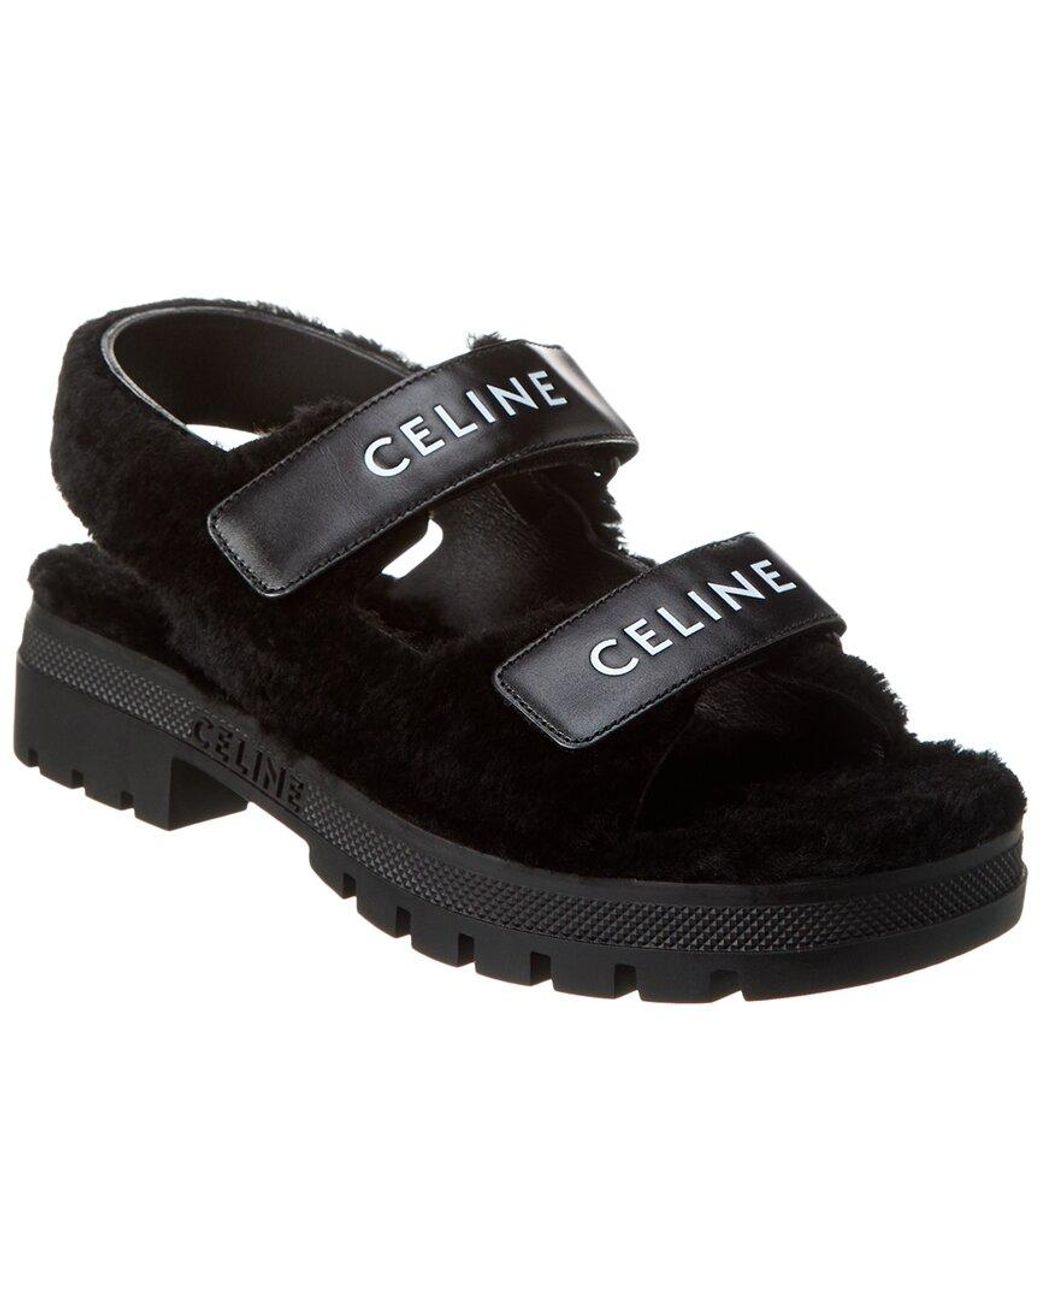 Celine Leo Shearling & Leather Sandal in Black